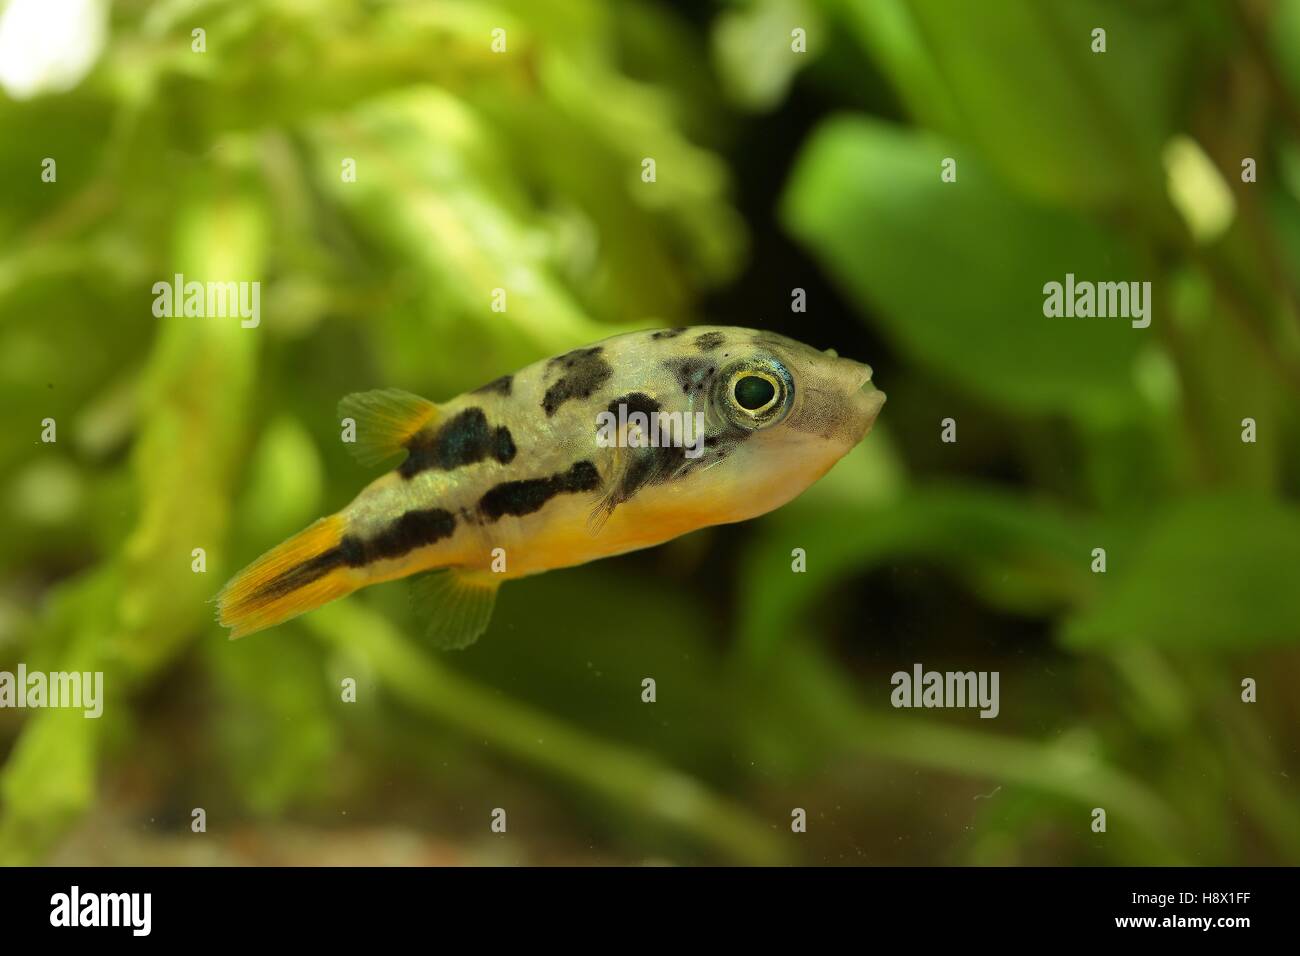 (Carinotetraodon travancoricus), dwarf pufferfish swimming in aquarium Stock Photo